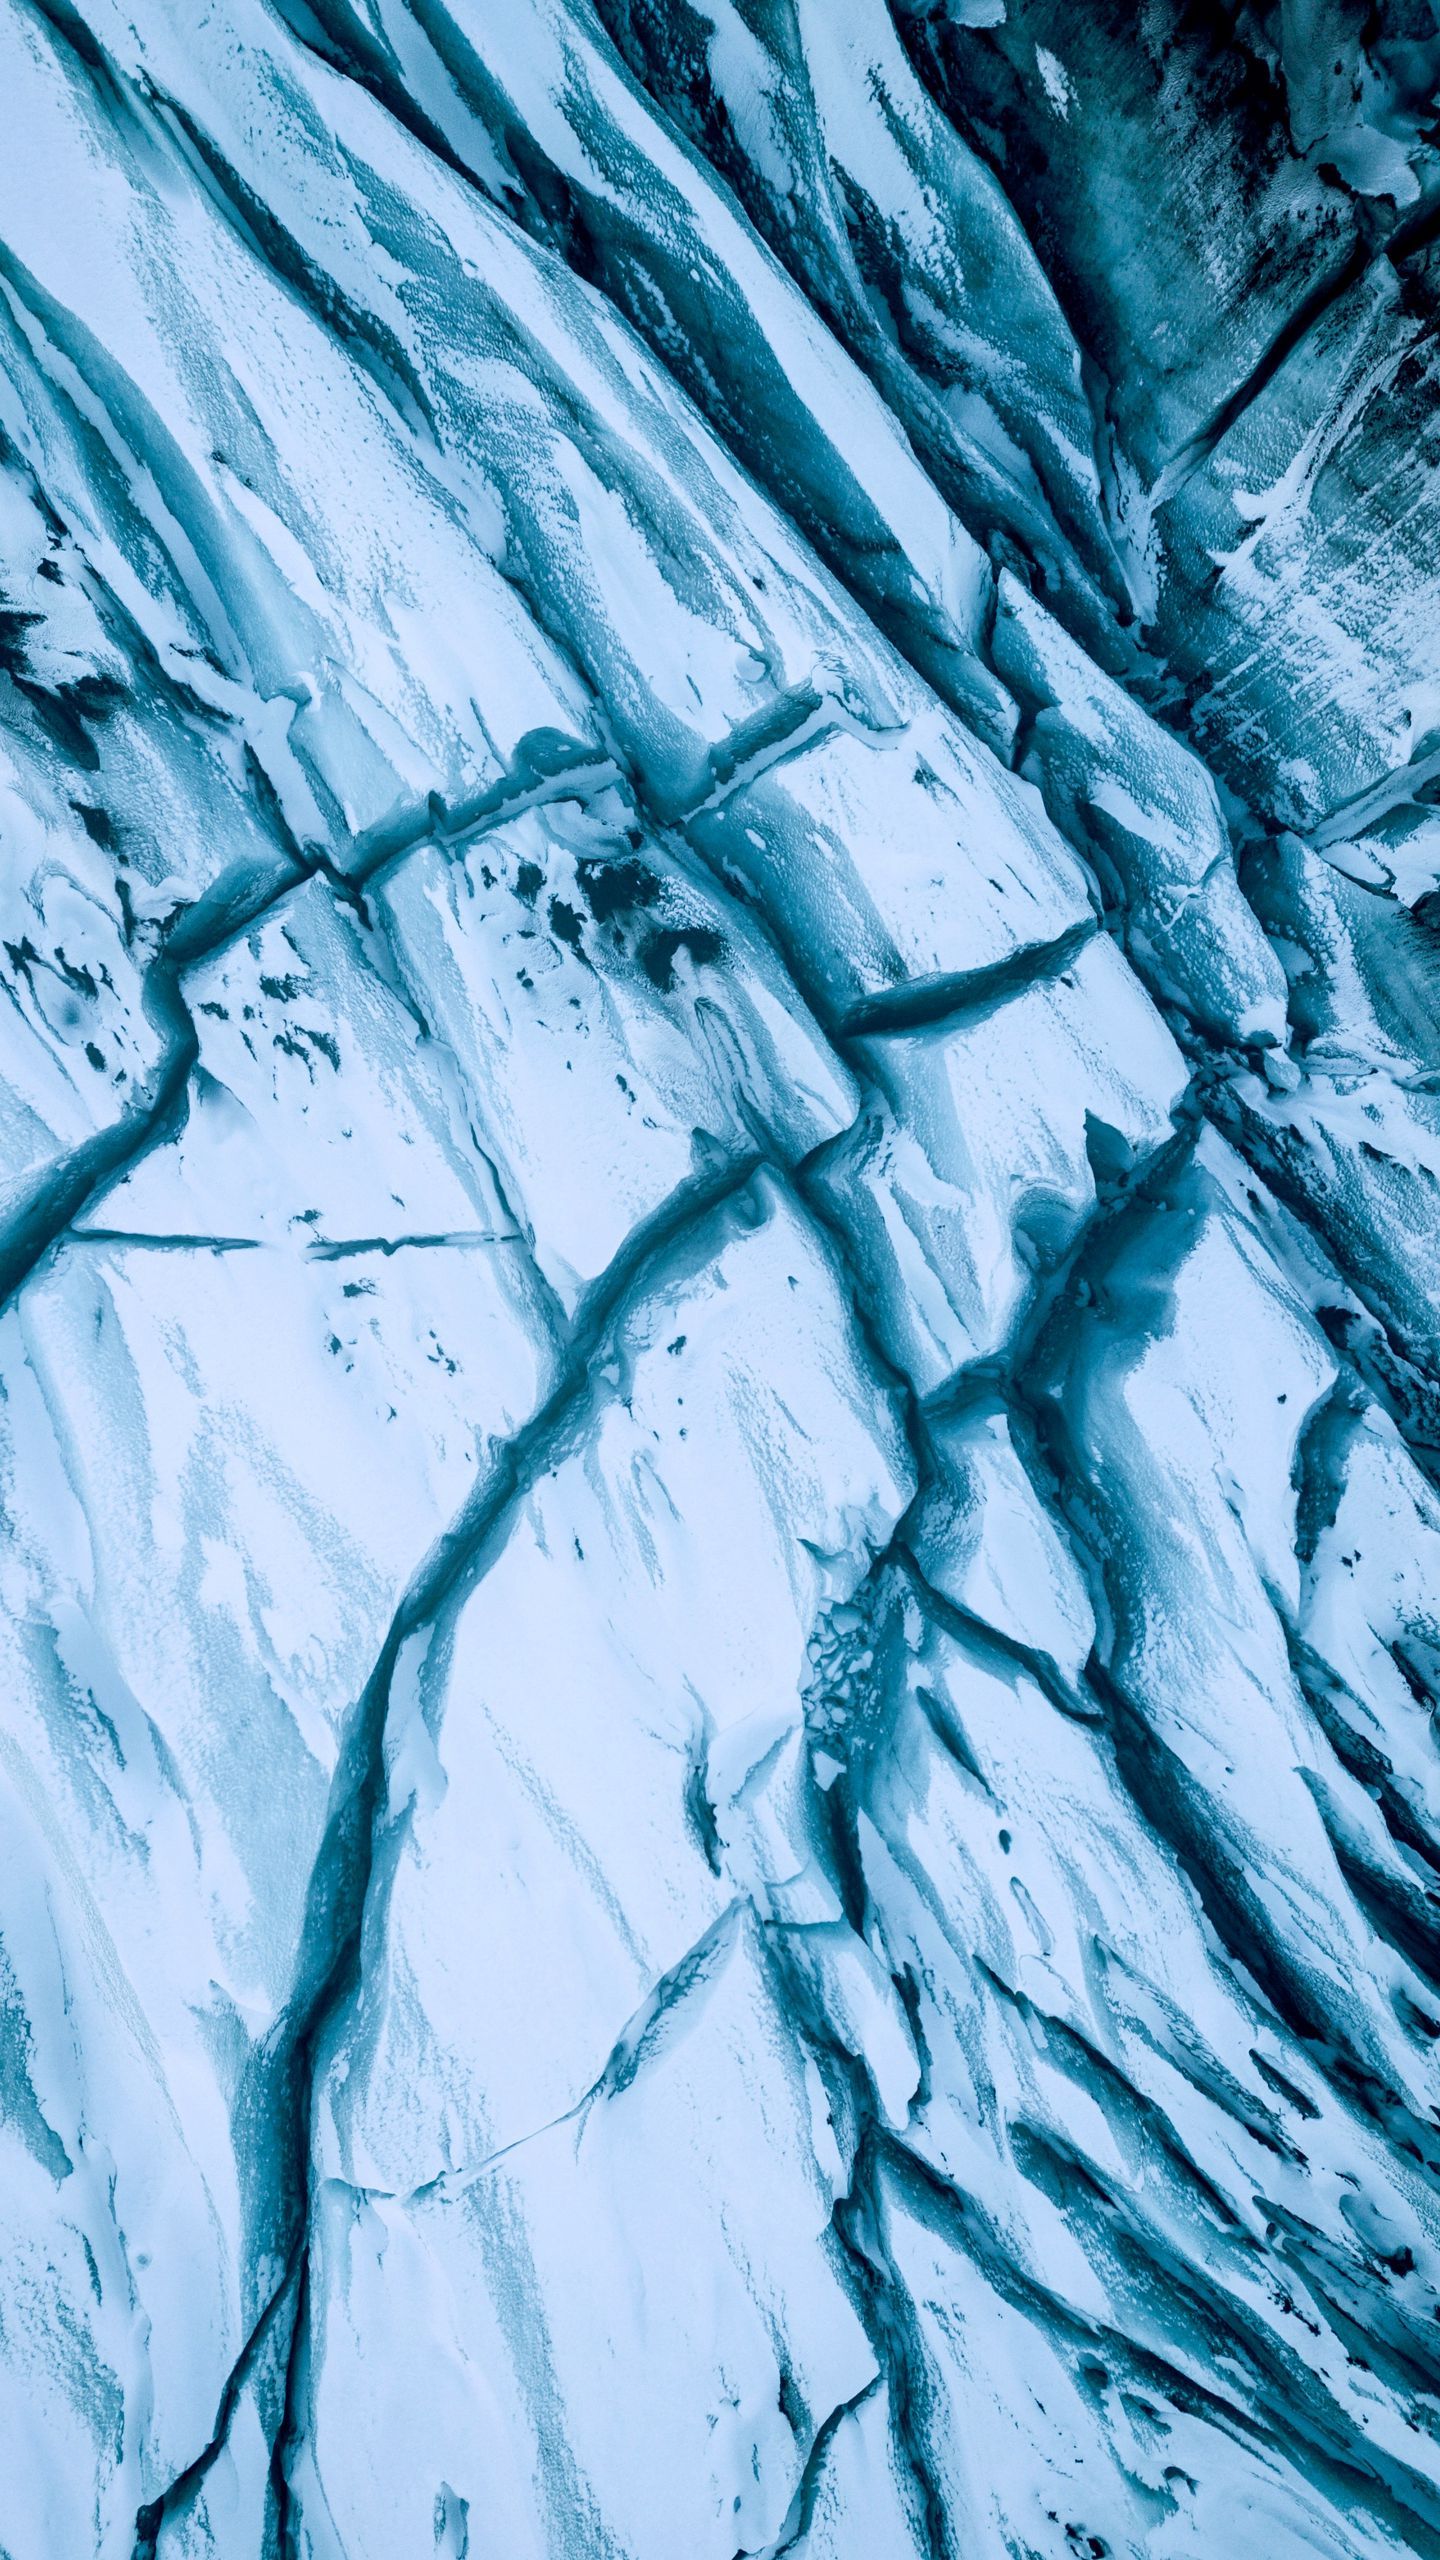 Download wallpaper 1440x2560 ice, glacier, snow, cranny qhd samsung galaxy s s edge, note, lg g4 HD background